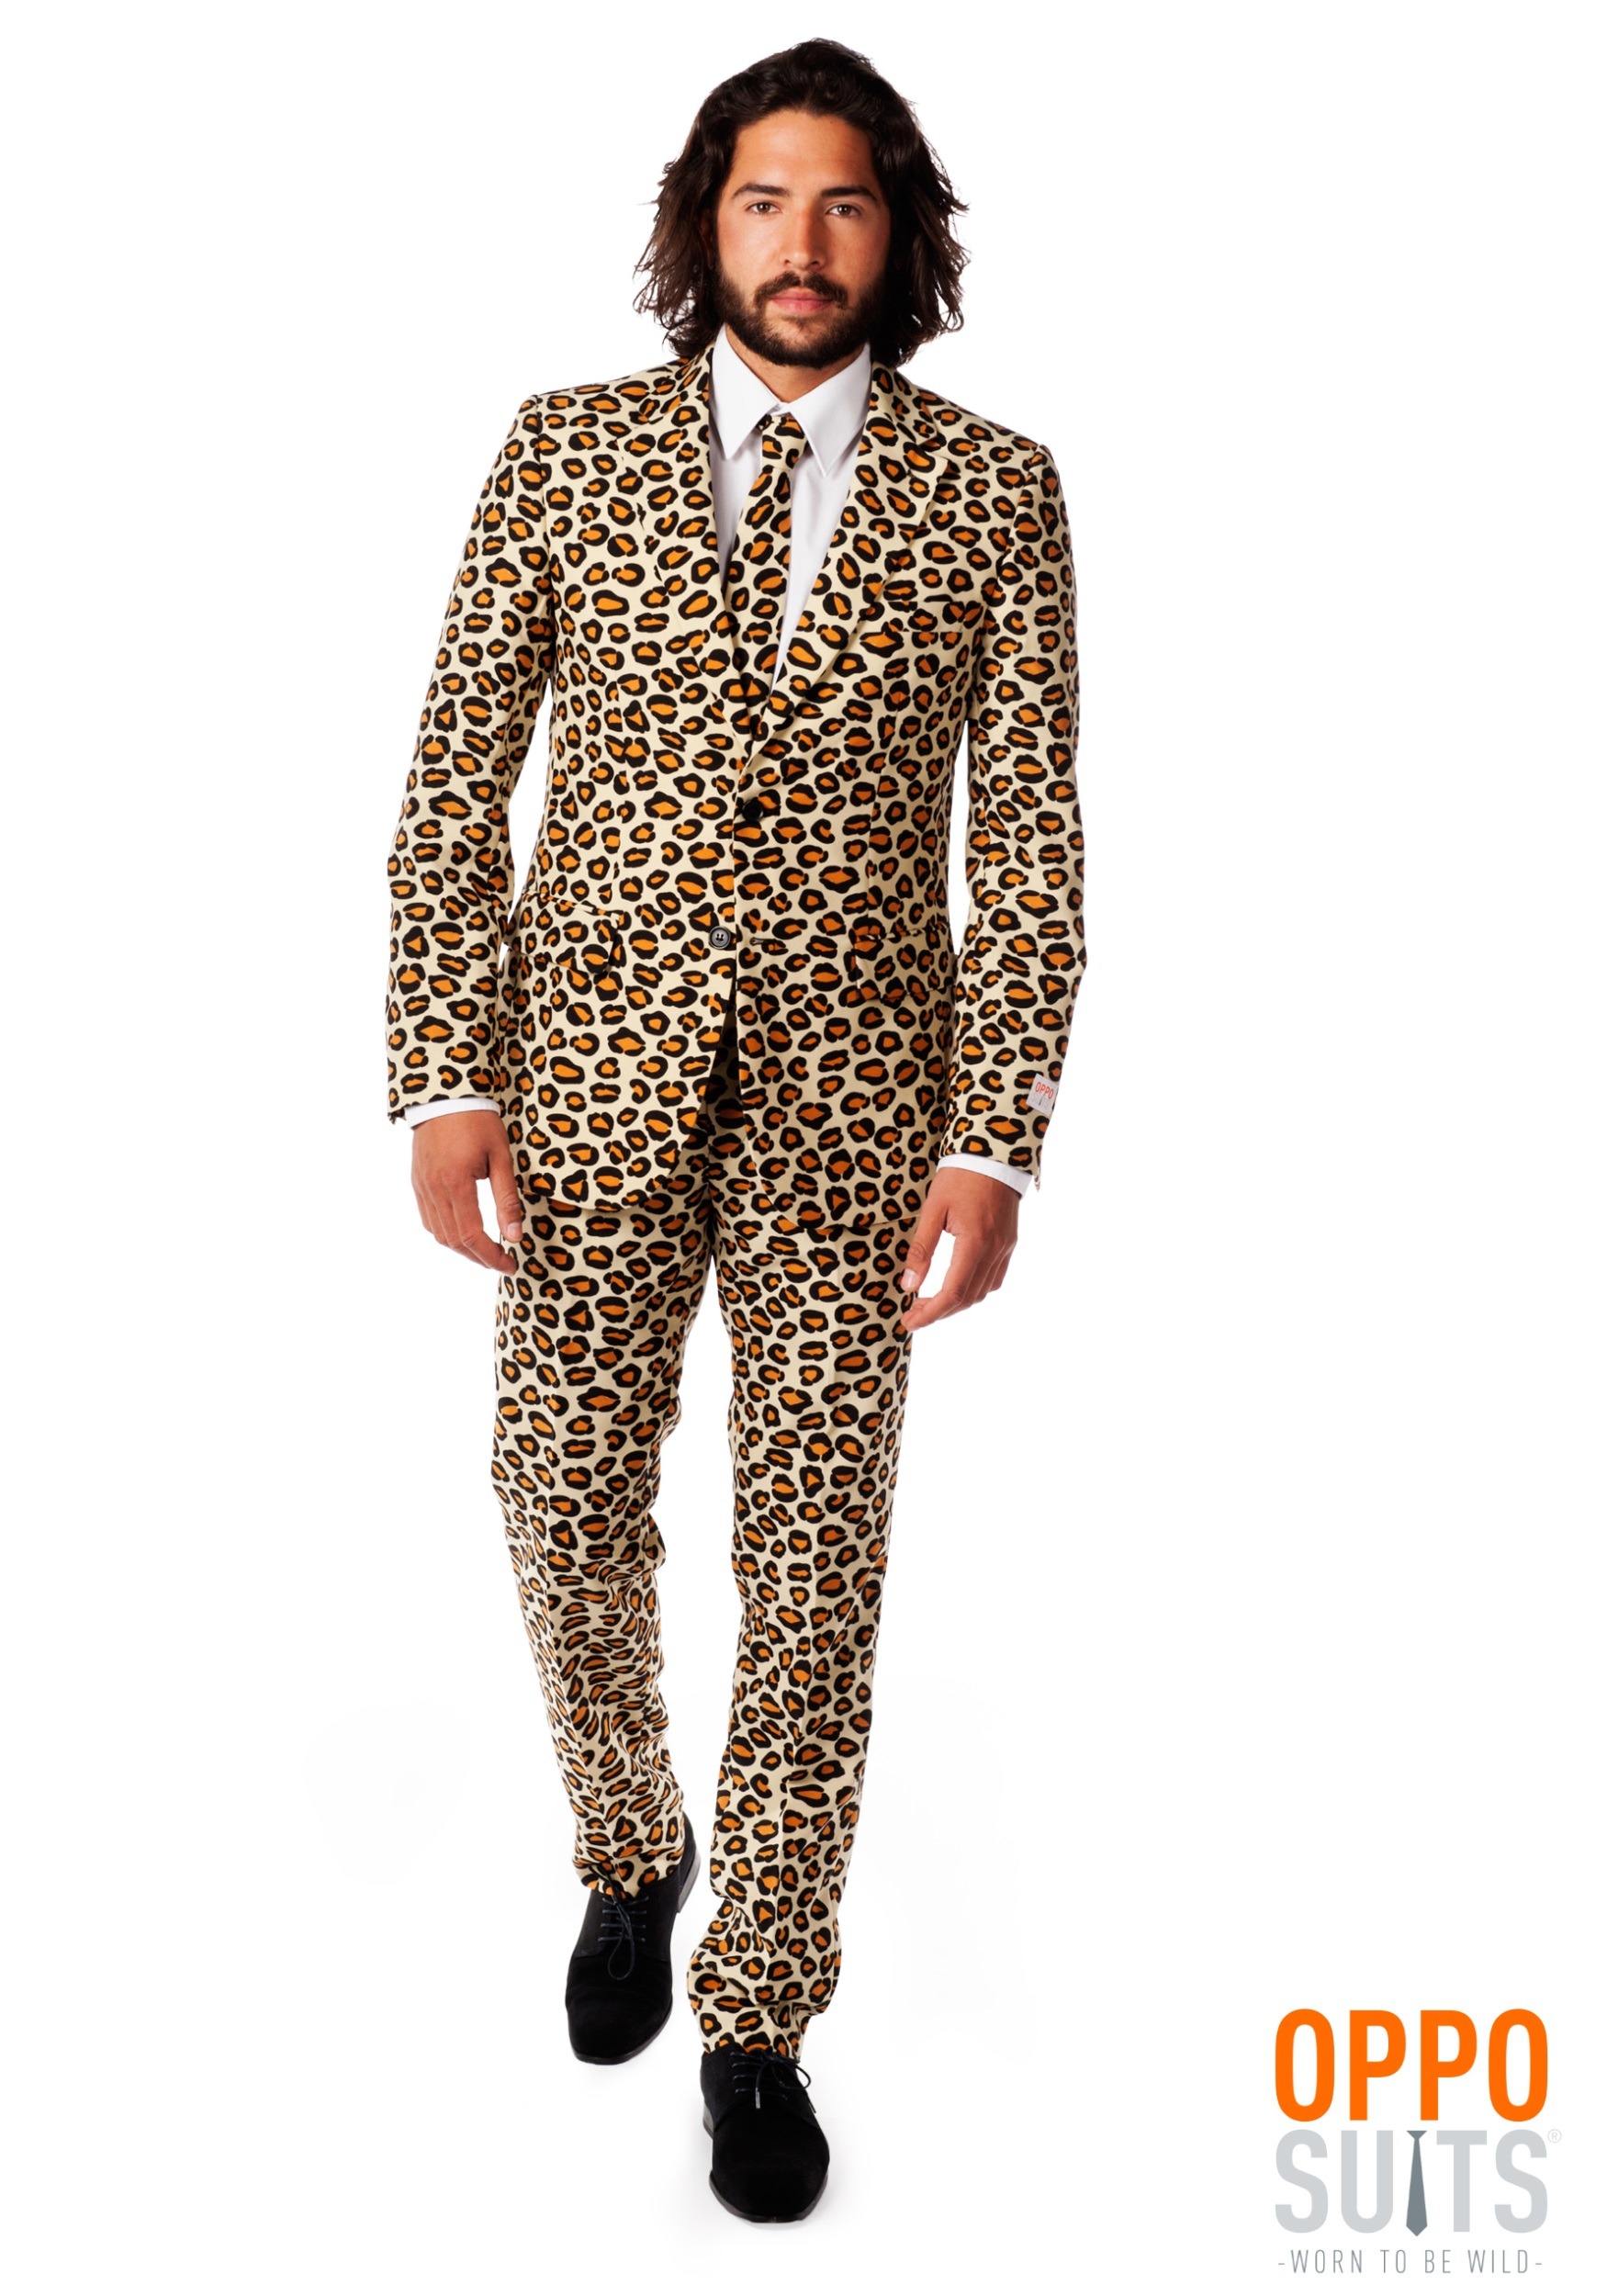 Men’s OppoSuits Jaguar Print Costume Suit